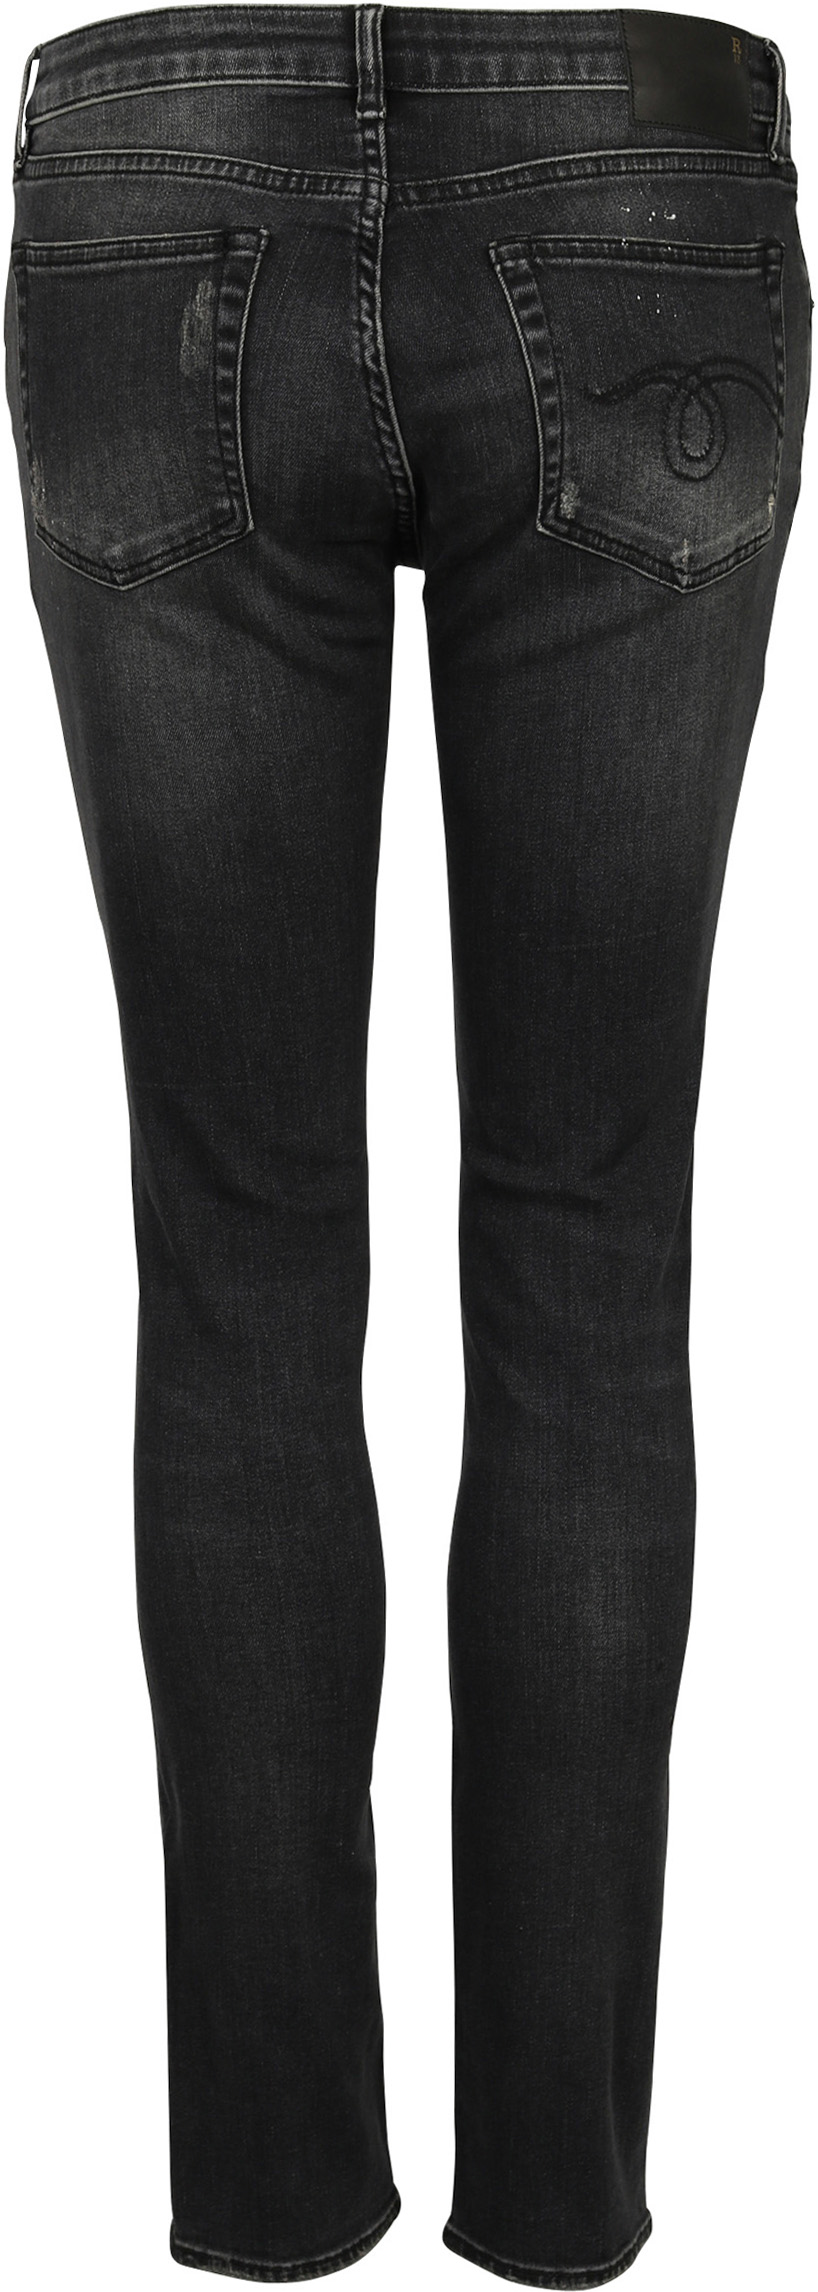 R13 Jeans Kate Skinny Orion Black Wash 26